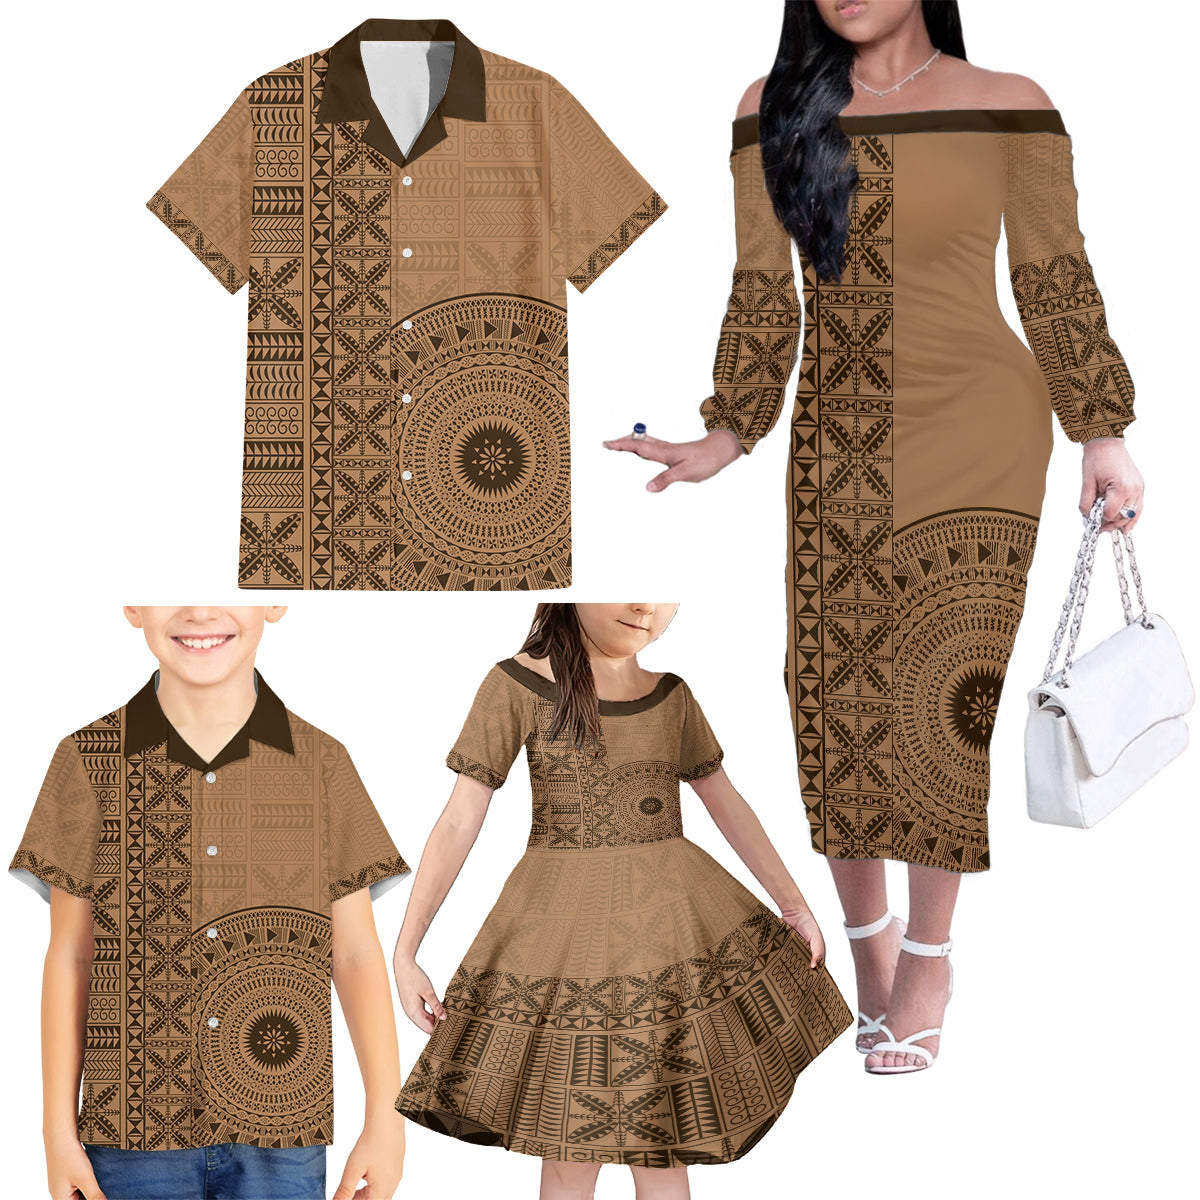 Fakaalofa Lahi Atu Niue Family Matching Off Shoulder Long Sleeve Dress and Hawaiian Shirt Vintage Hiapo Pattern Brown Version LT14 - Polynesian Pride